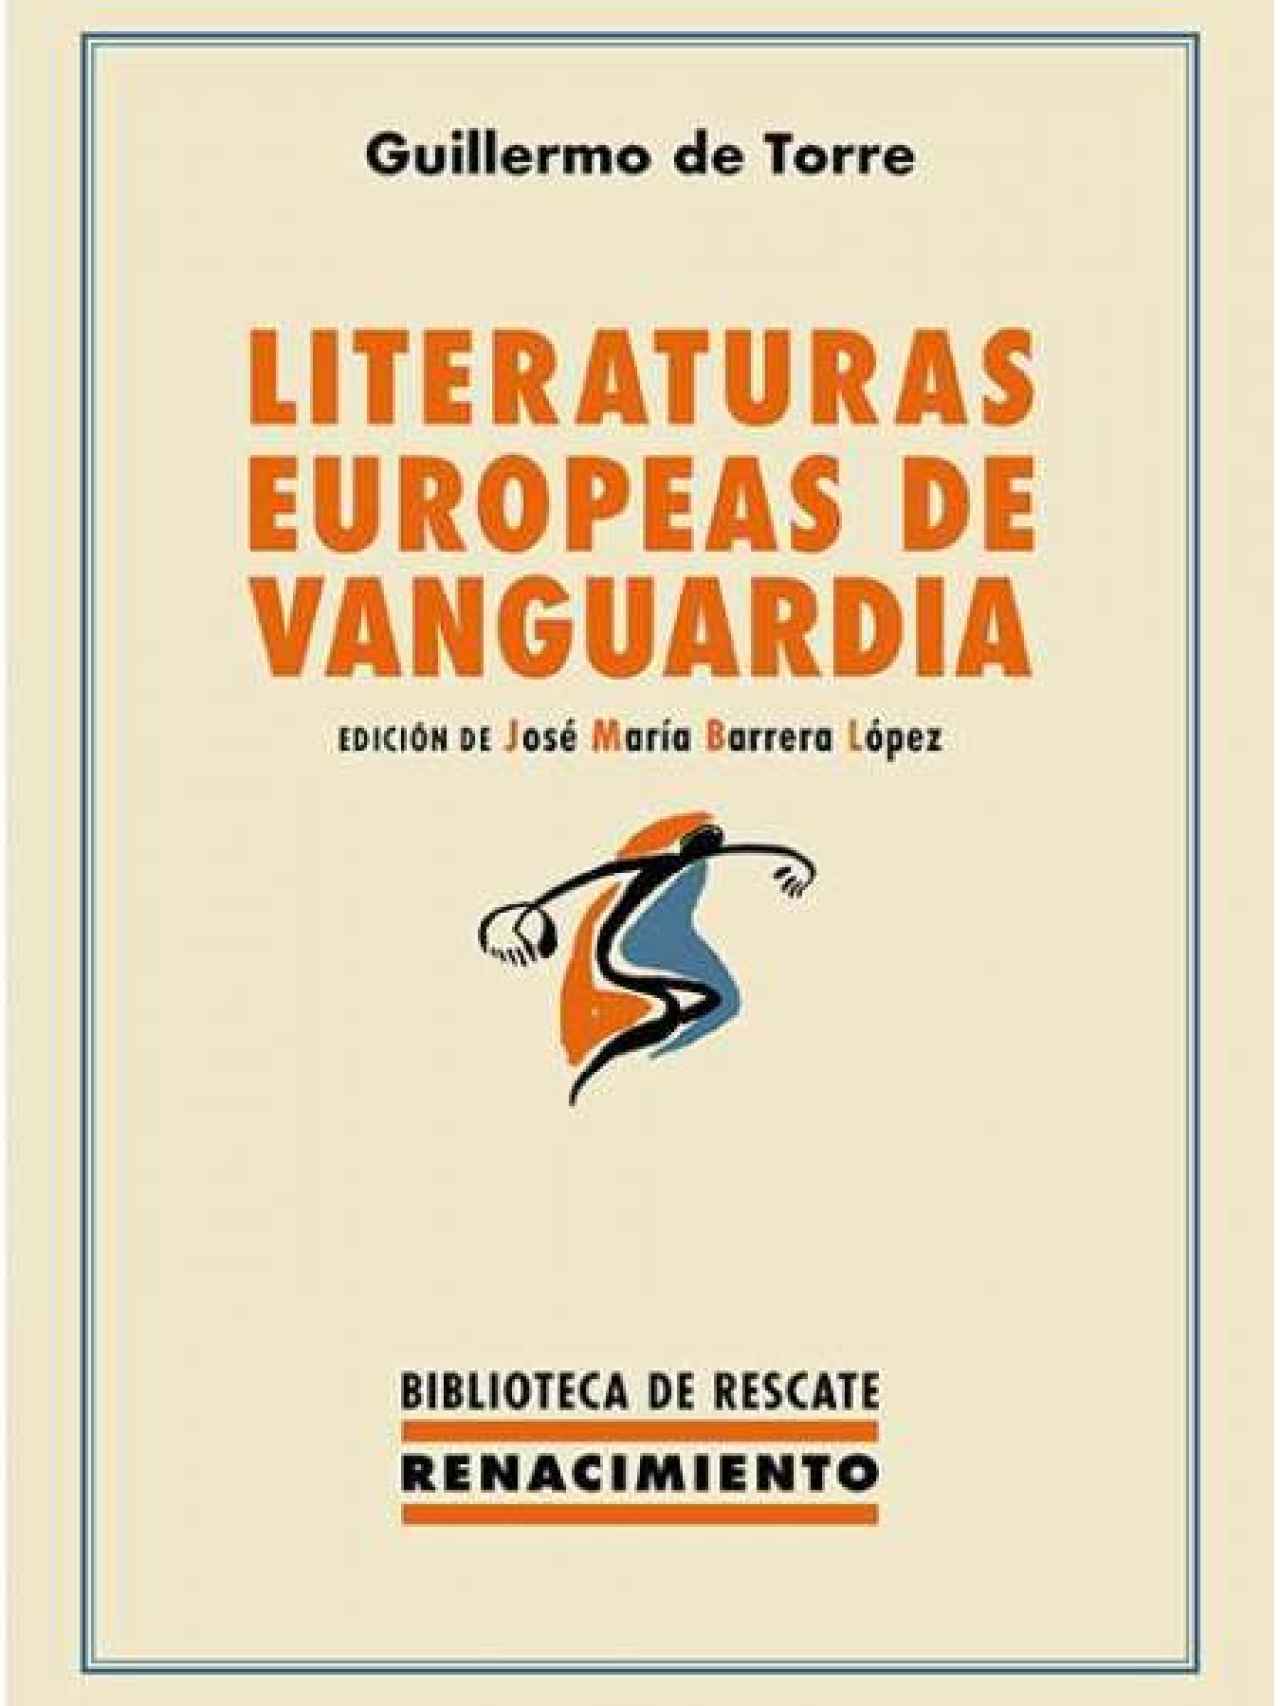 'Literaturas europeas de vanguardia'